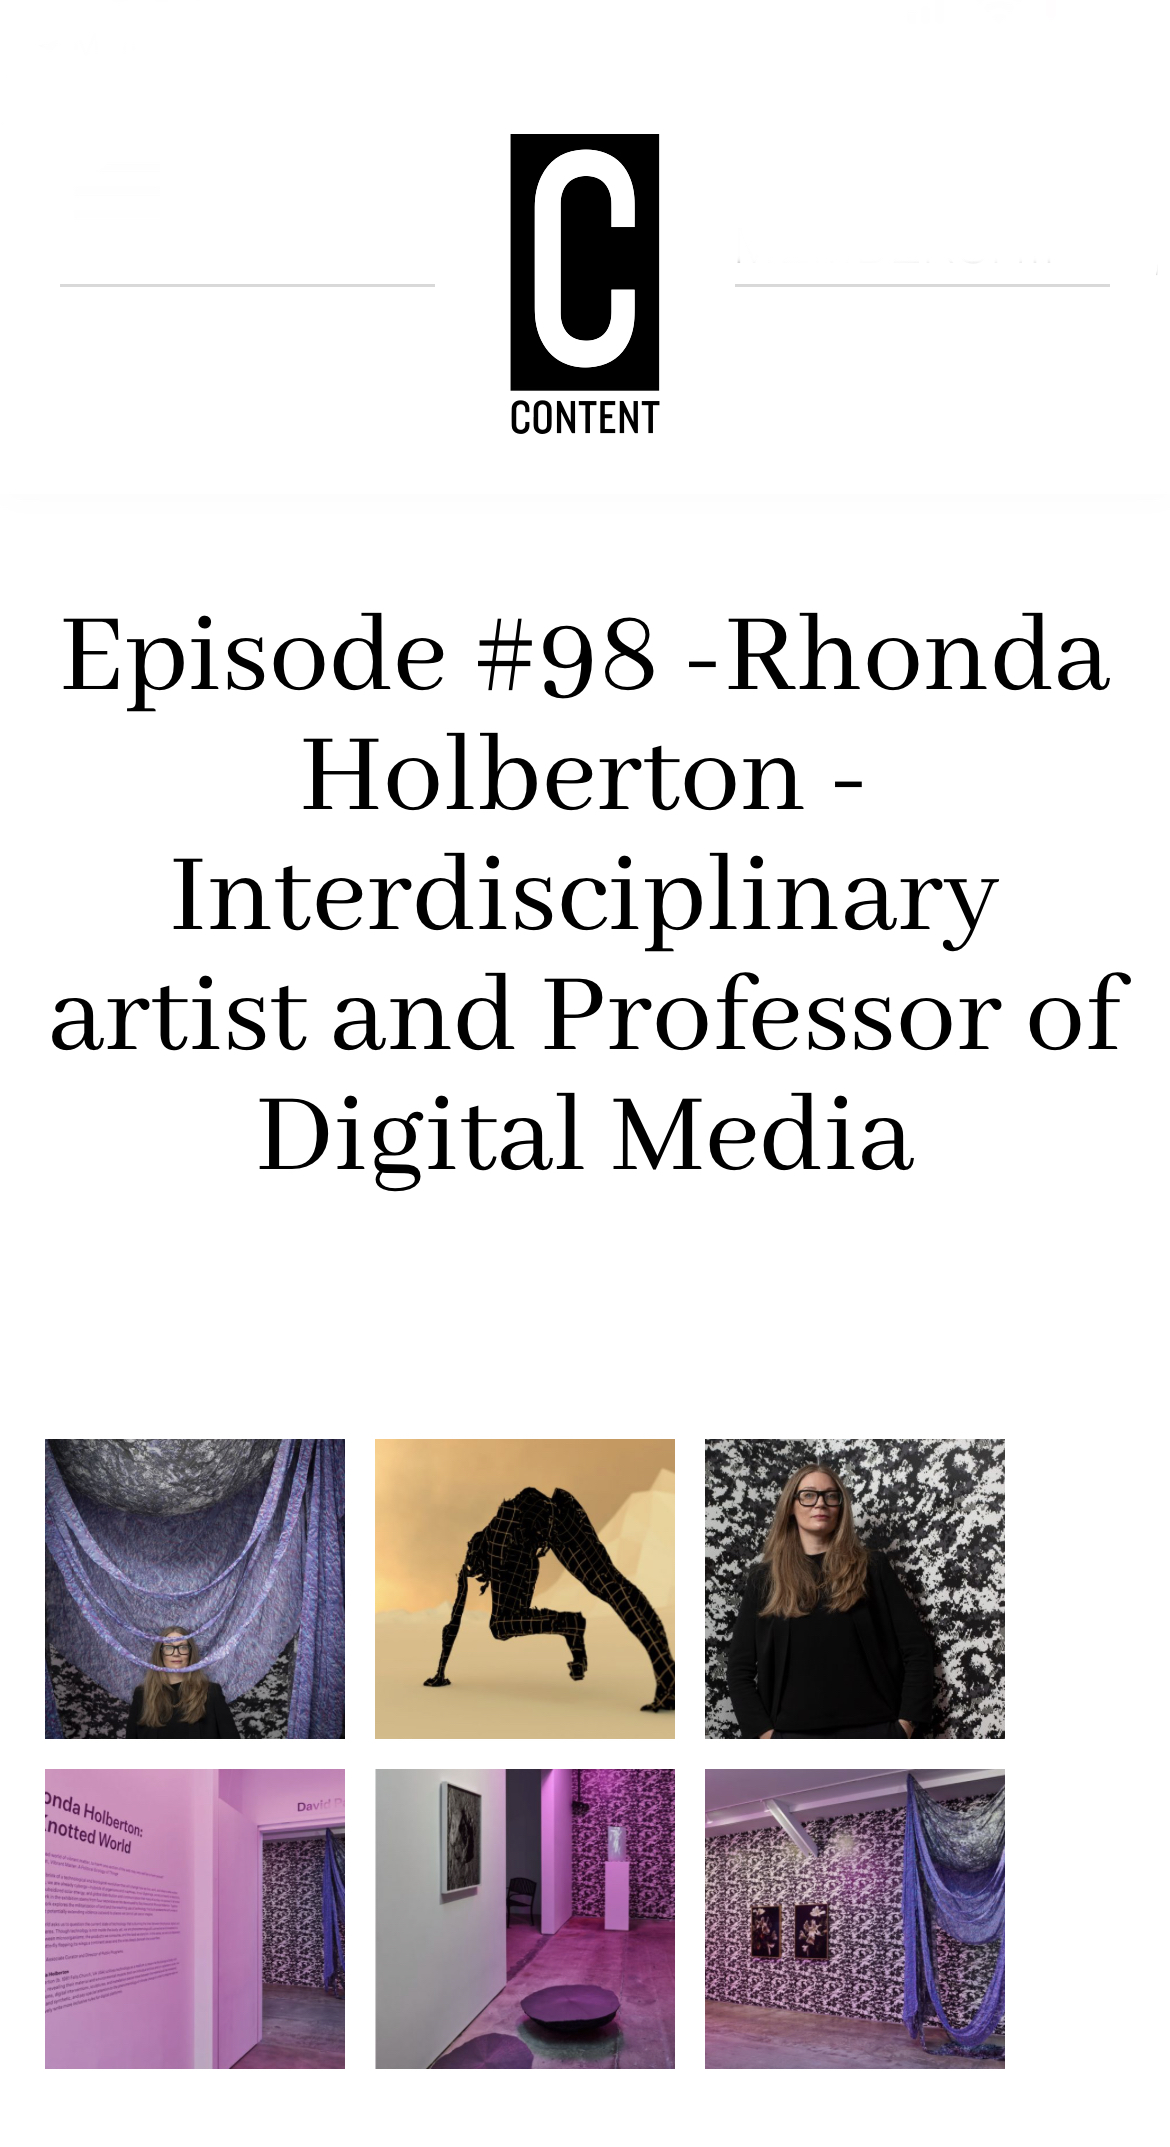 Content Magazine: Interview with Rhonda Holberton